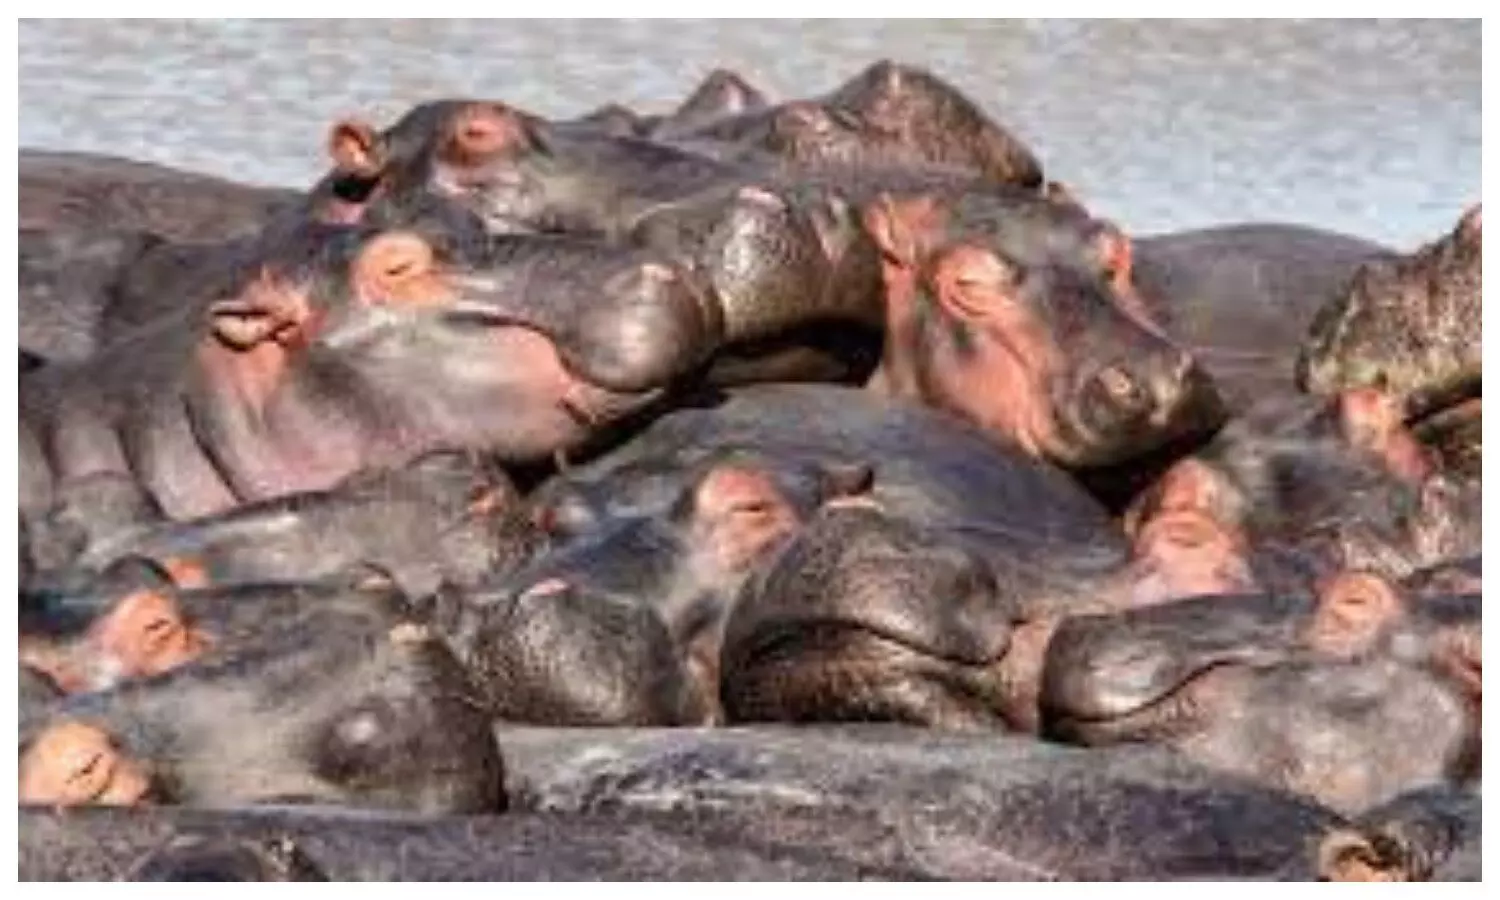 Hippo in India